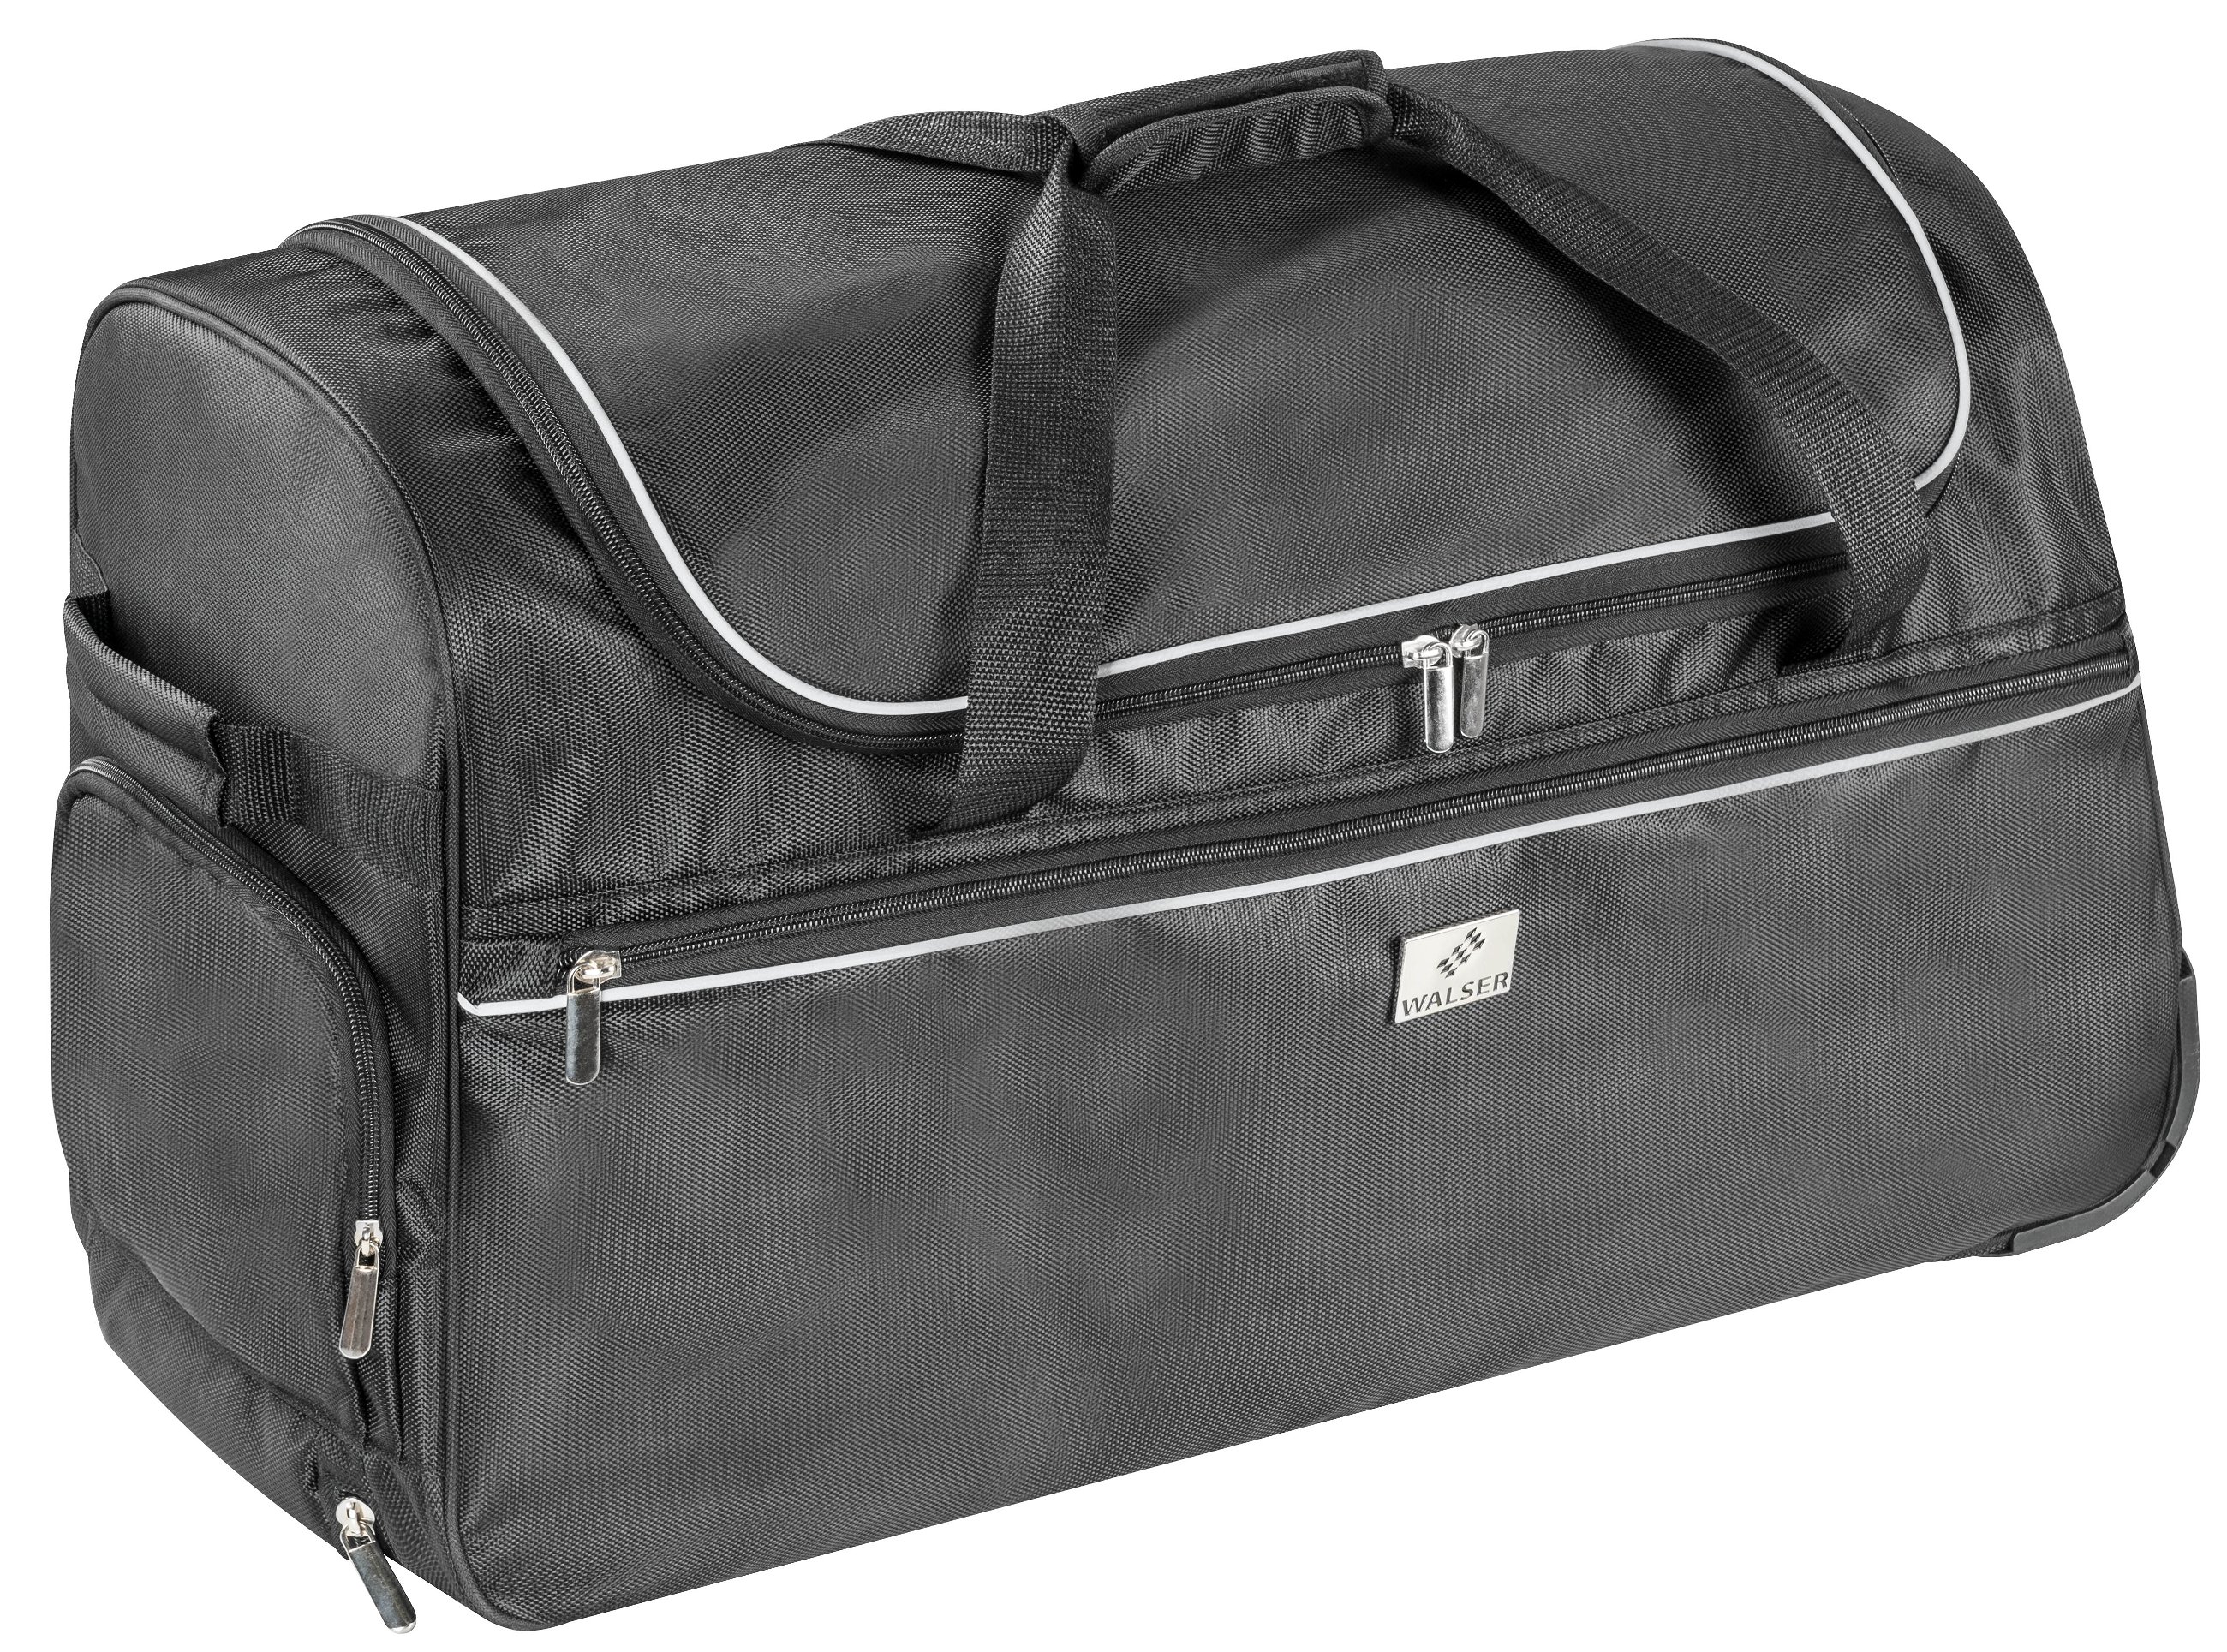 Carbags Trolley Bag, Reisetasche, Reisetrolley 130L - 70x40x40 cm